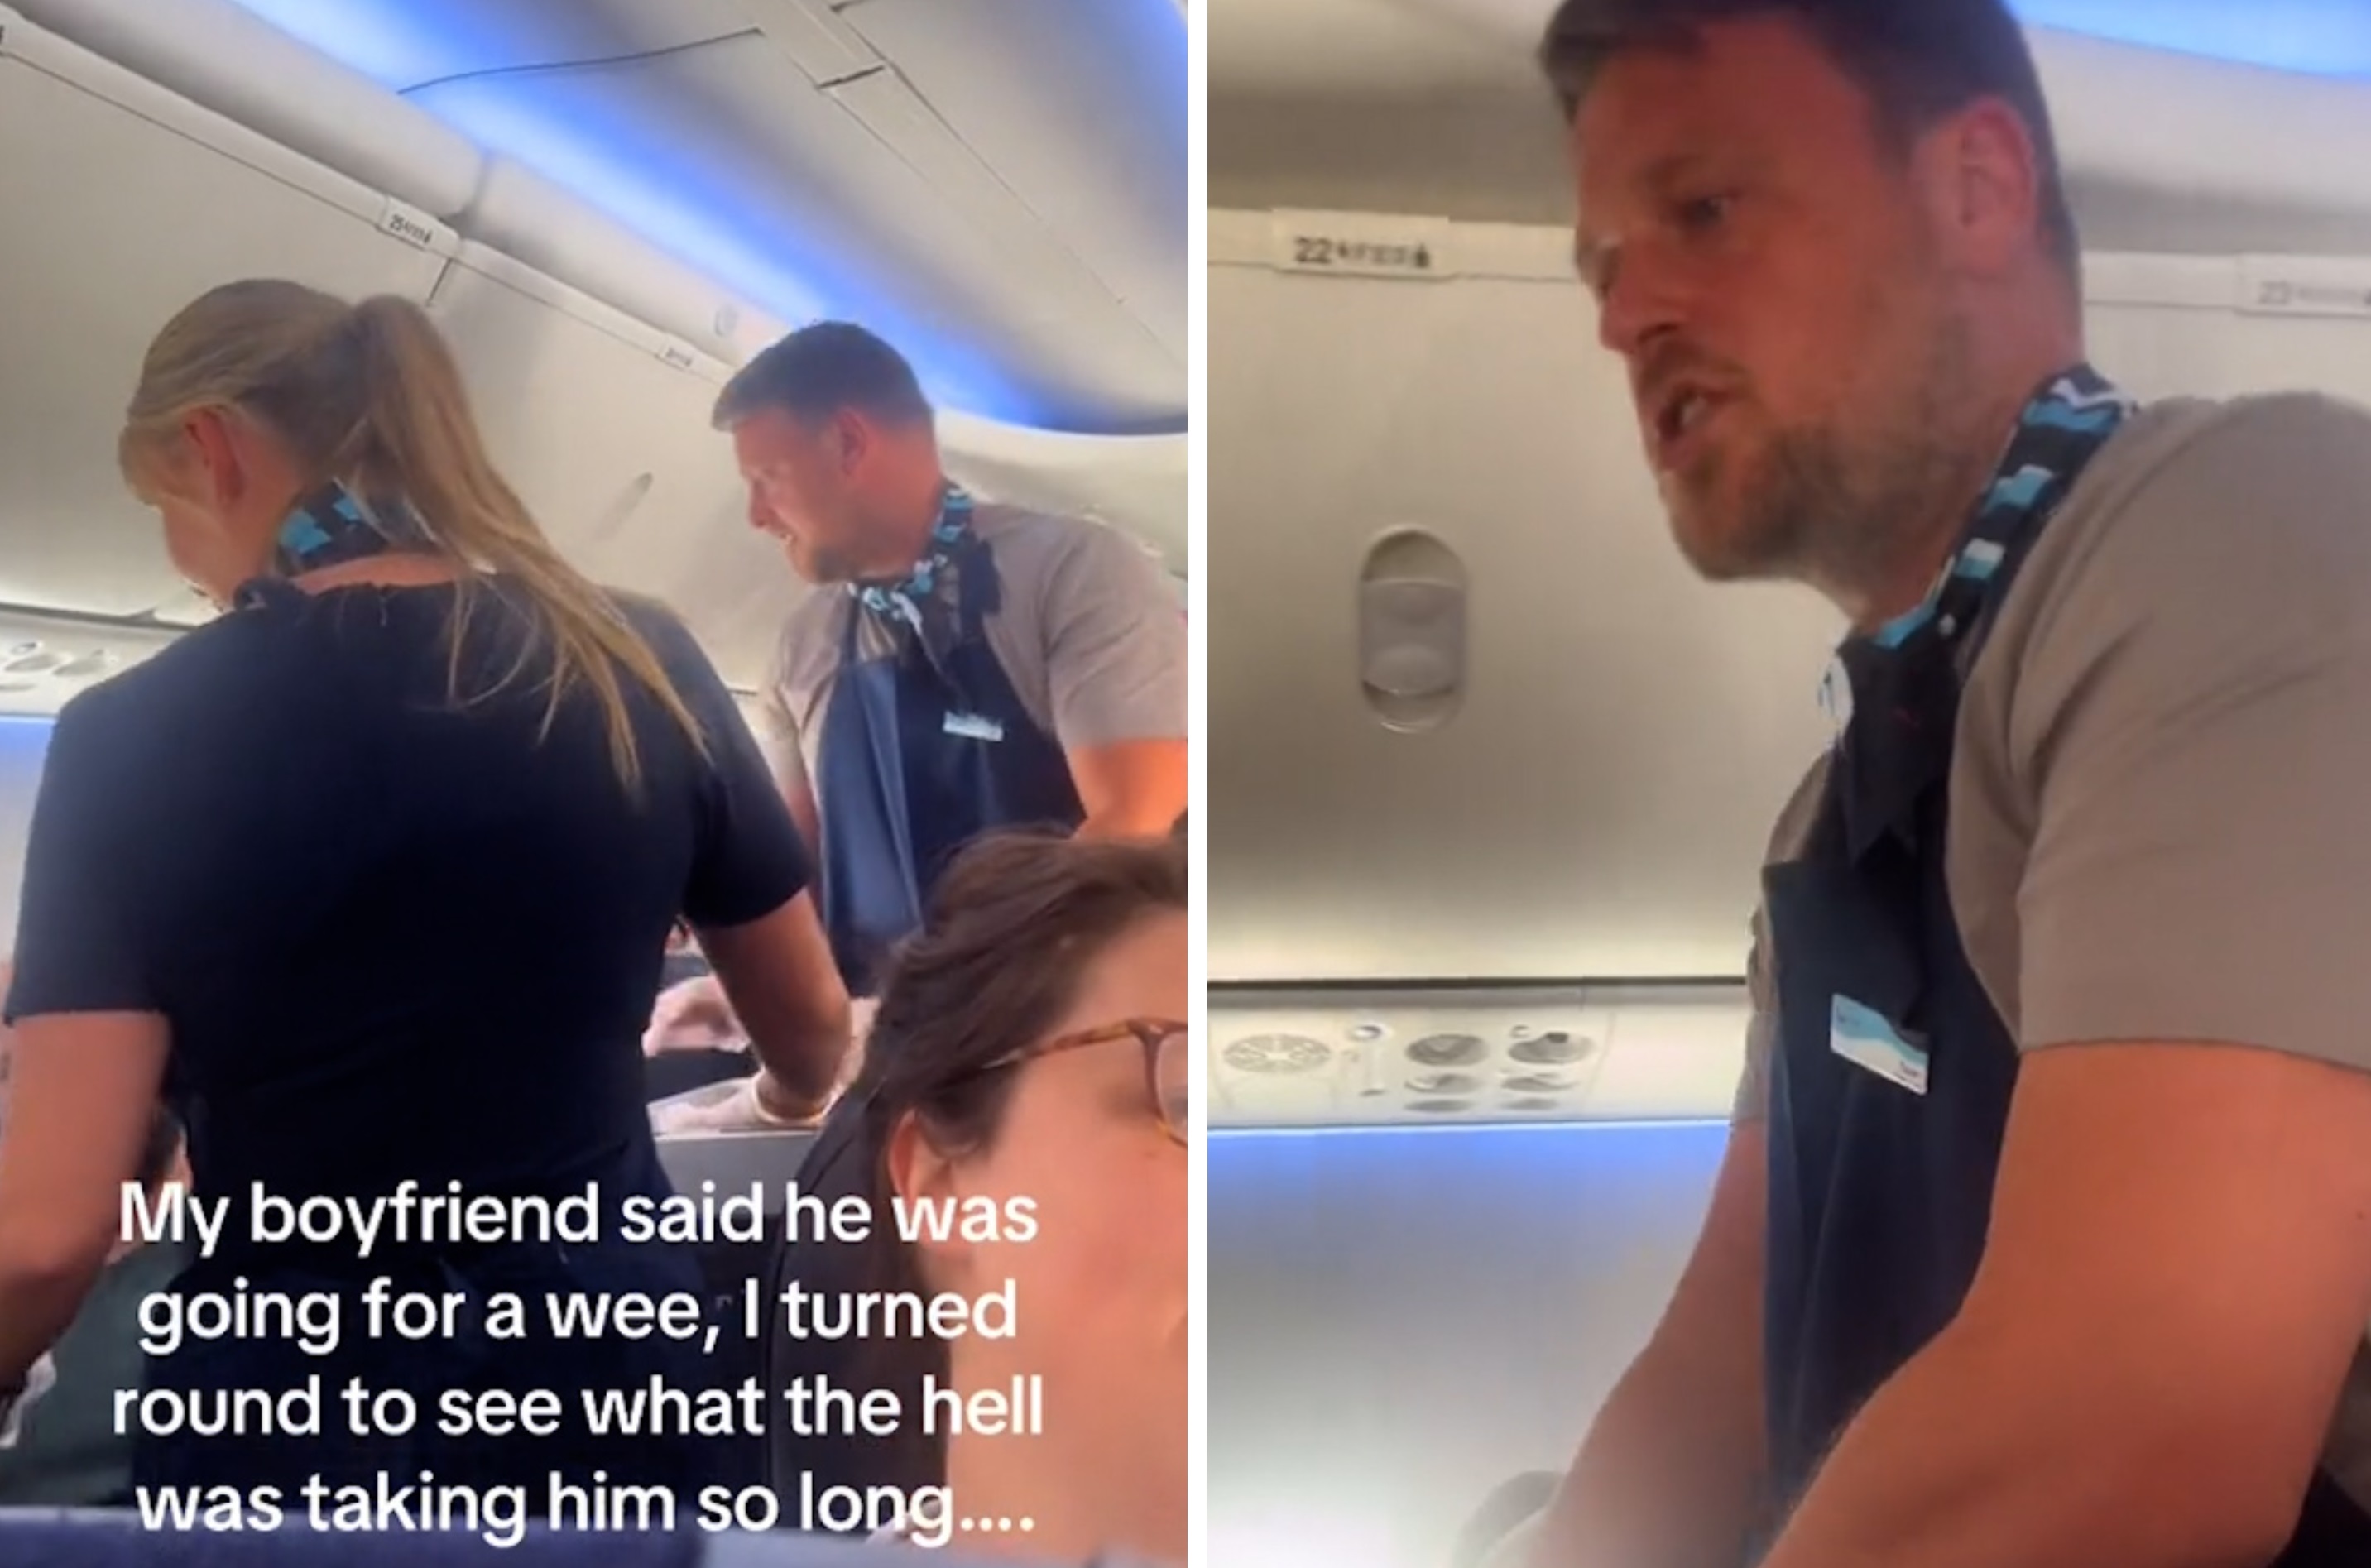 Passenger stunned as boyfriend returns from bathroom working as flight attendant